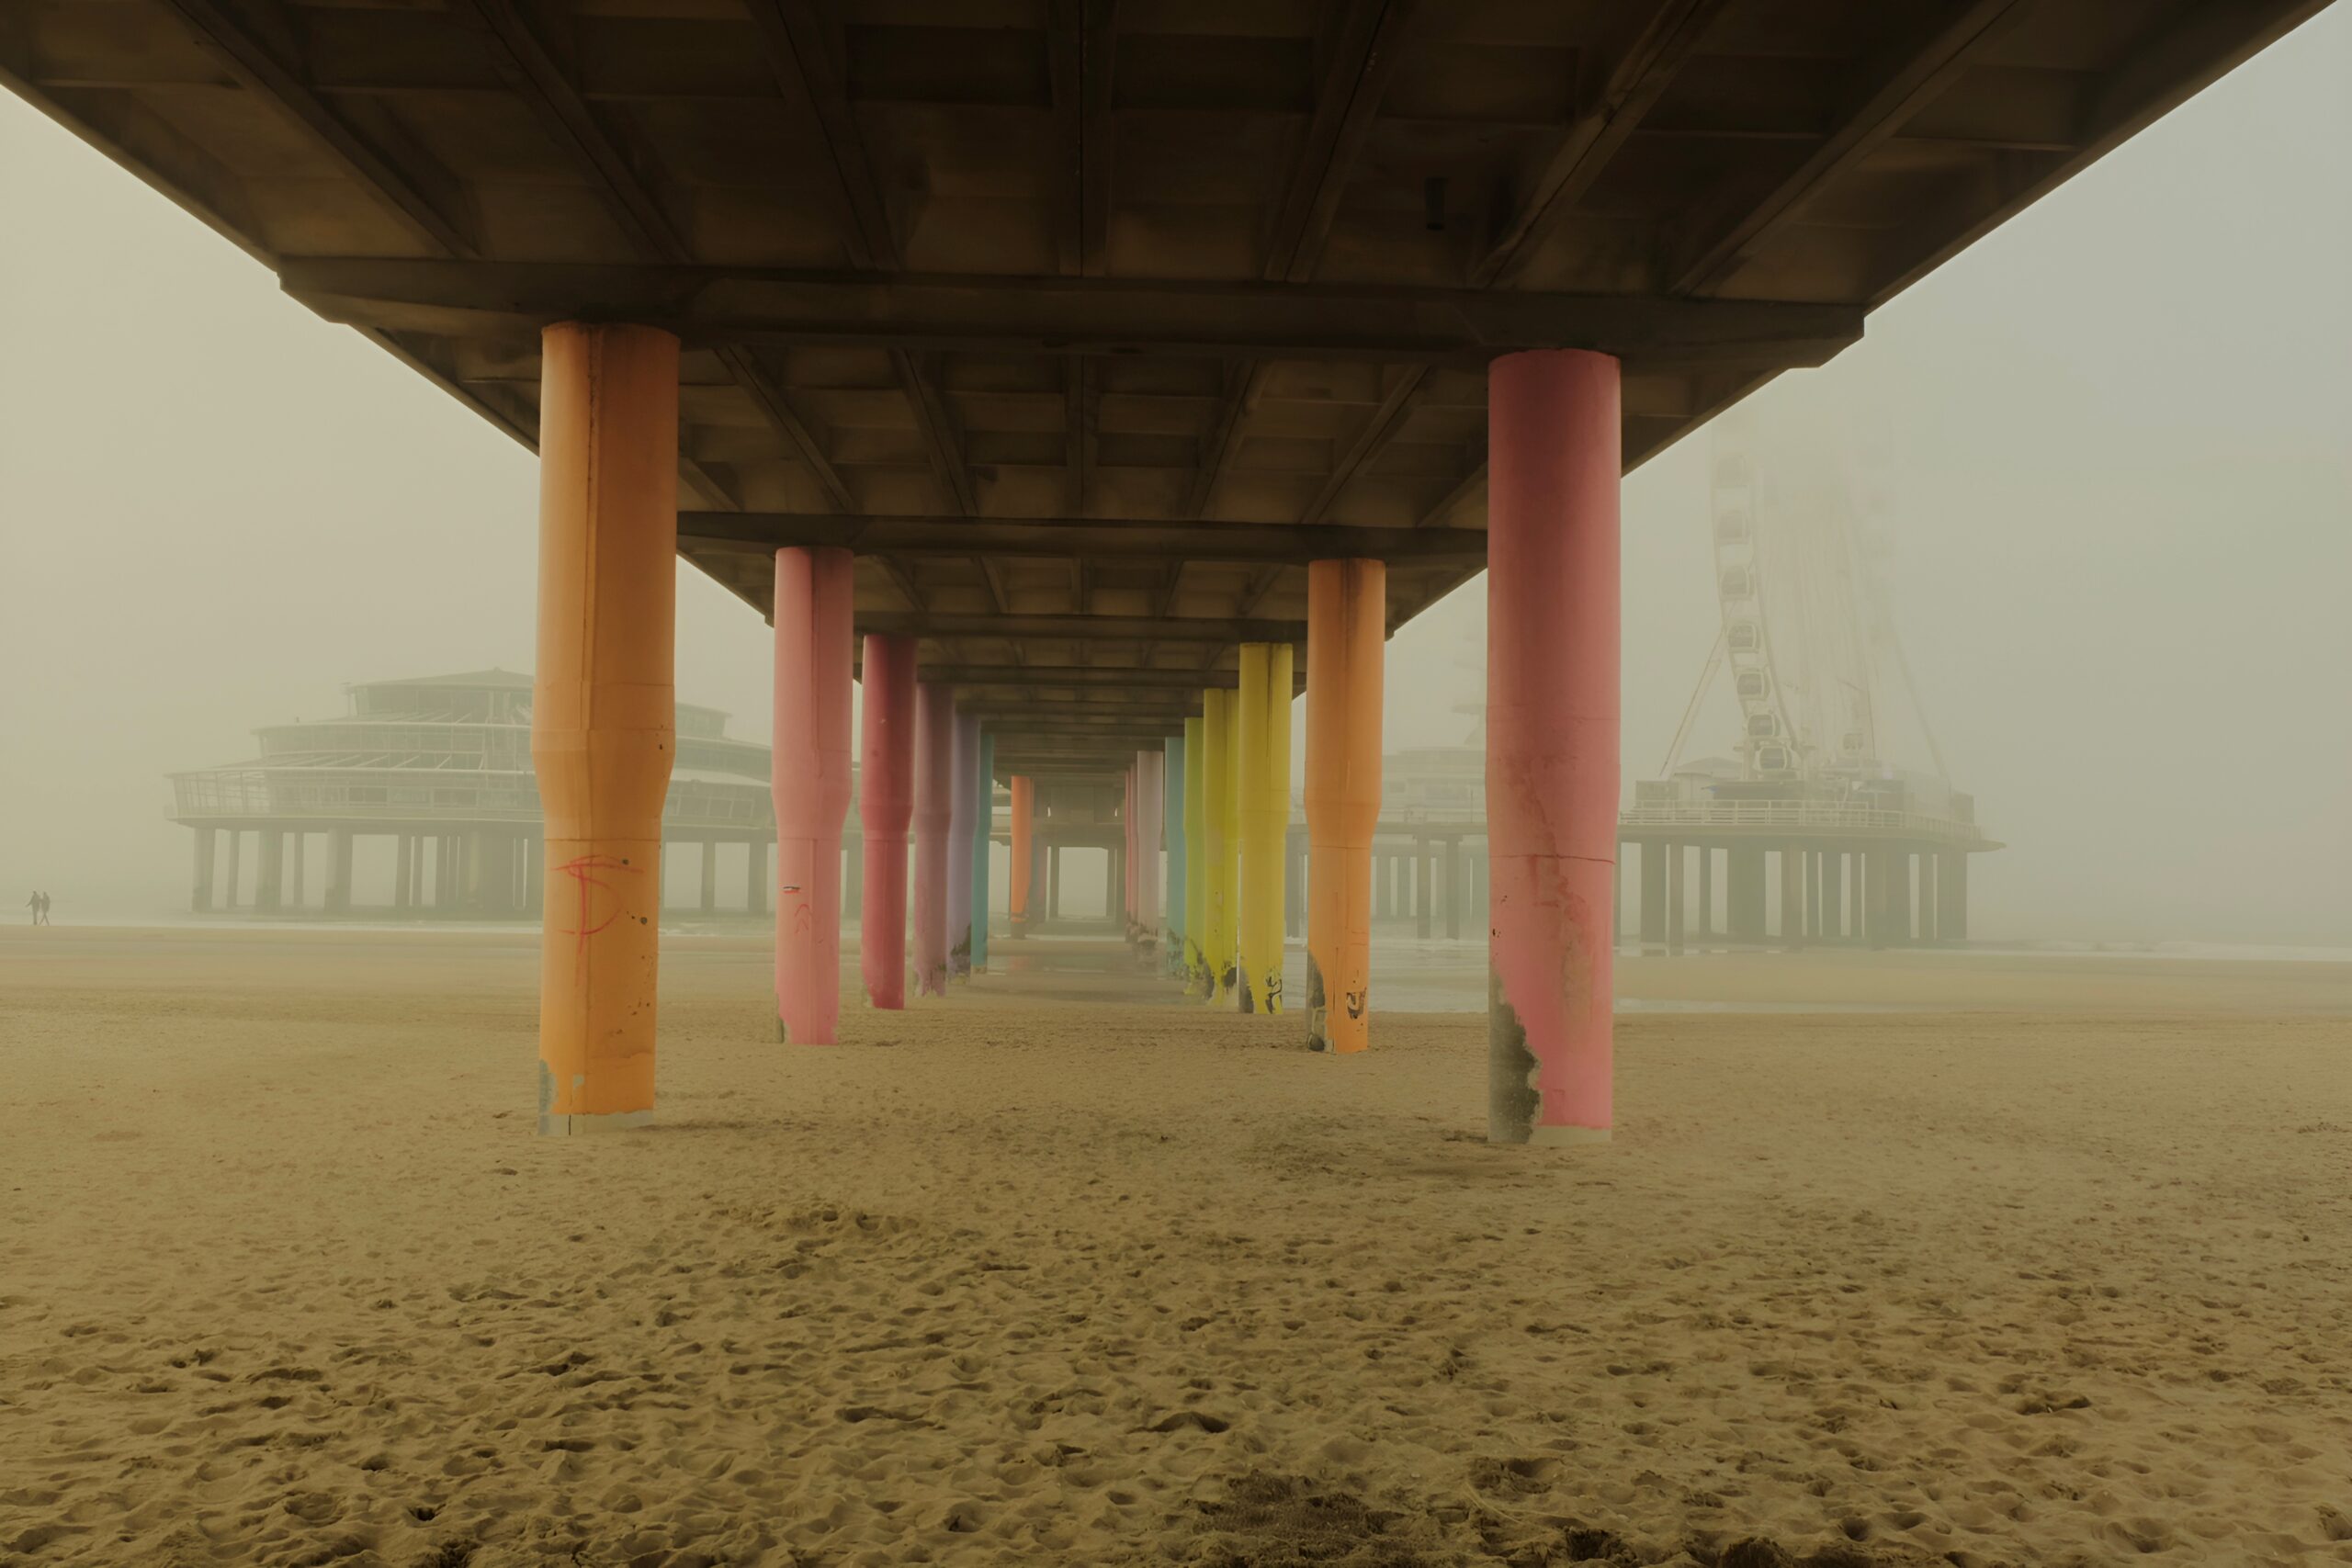 Colorful pillars under a bridge.